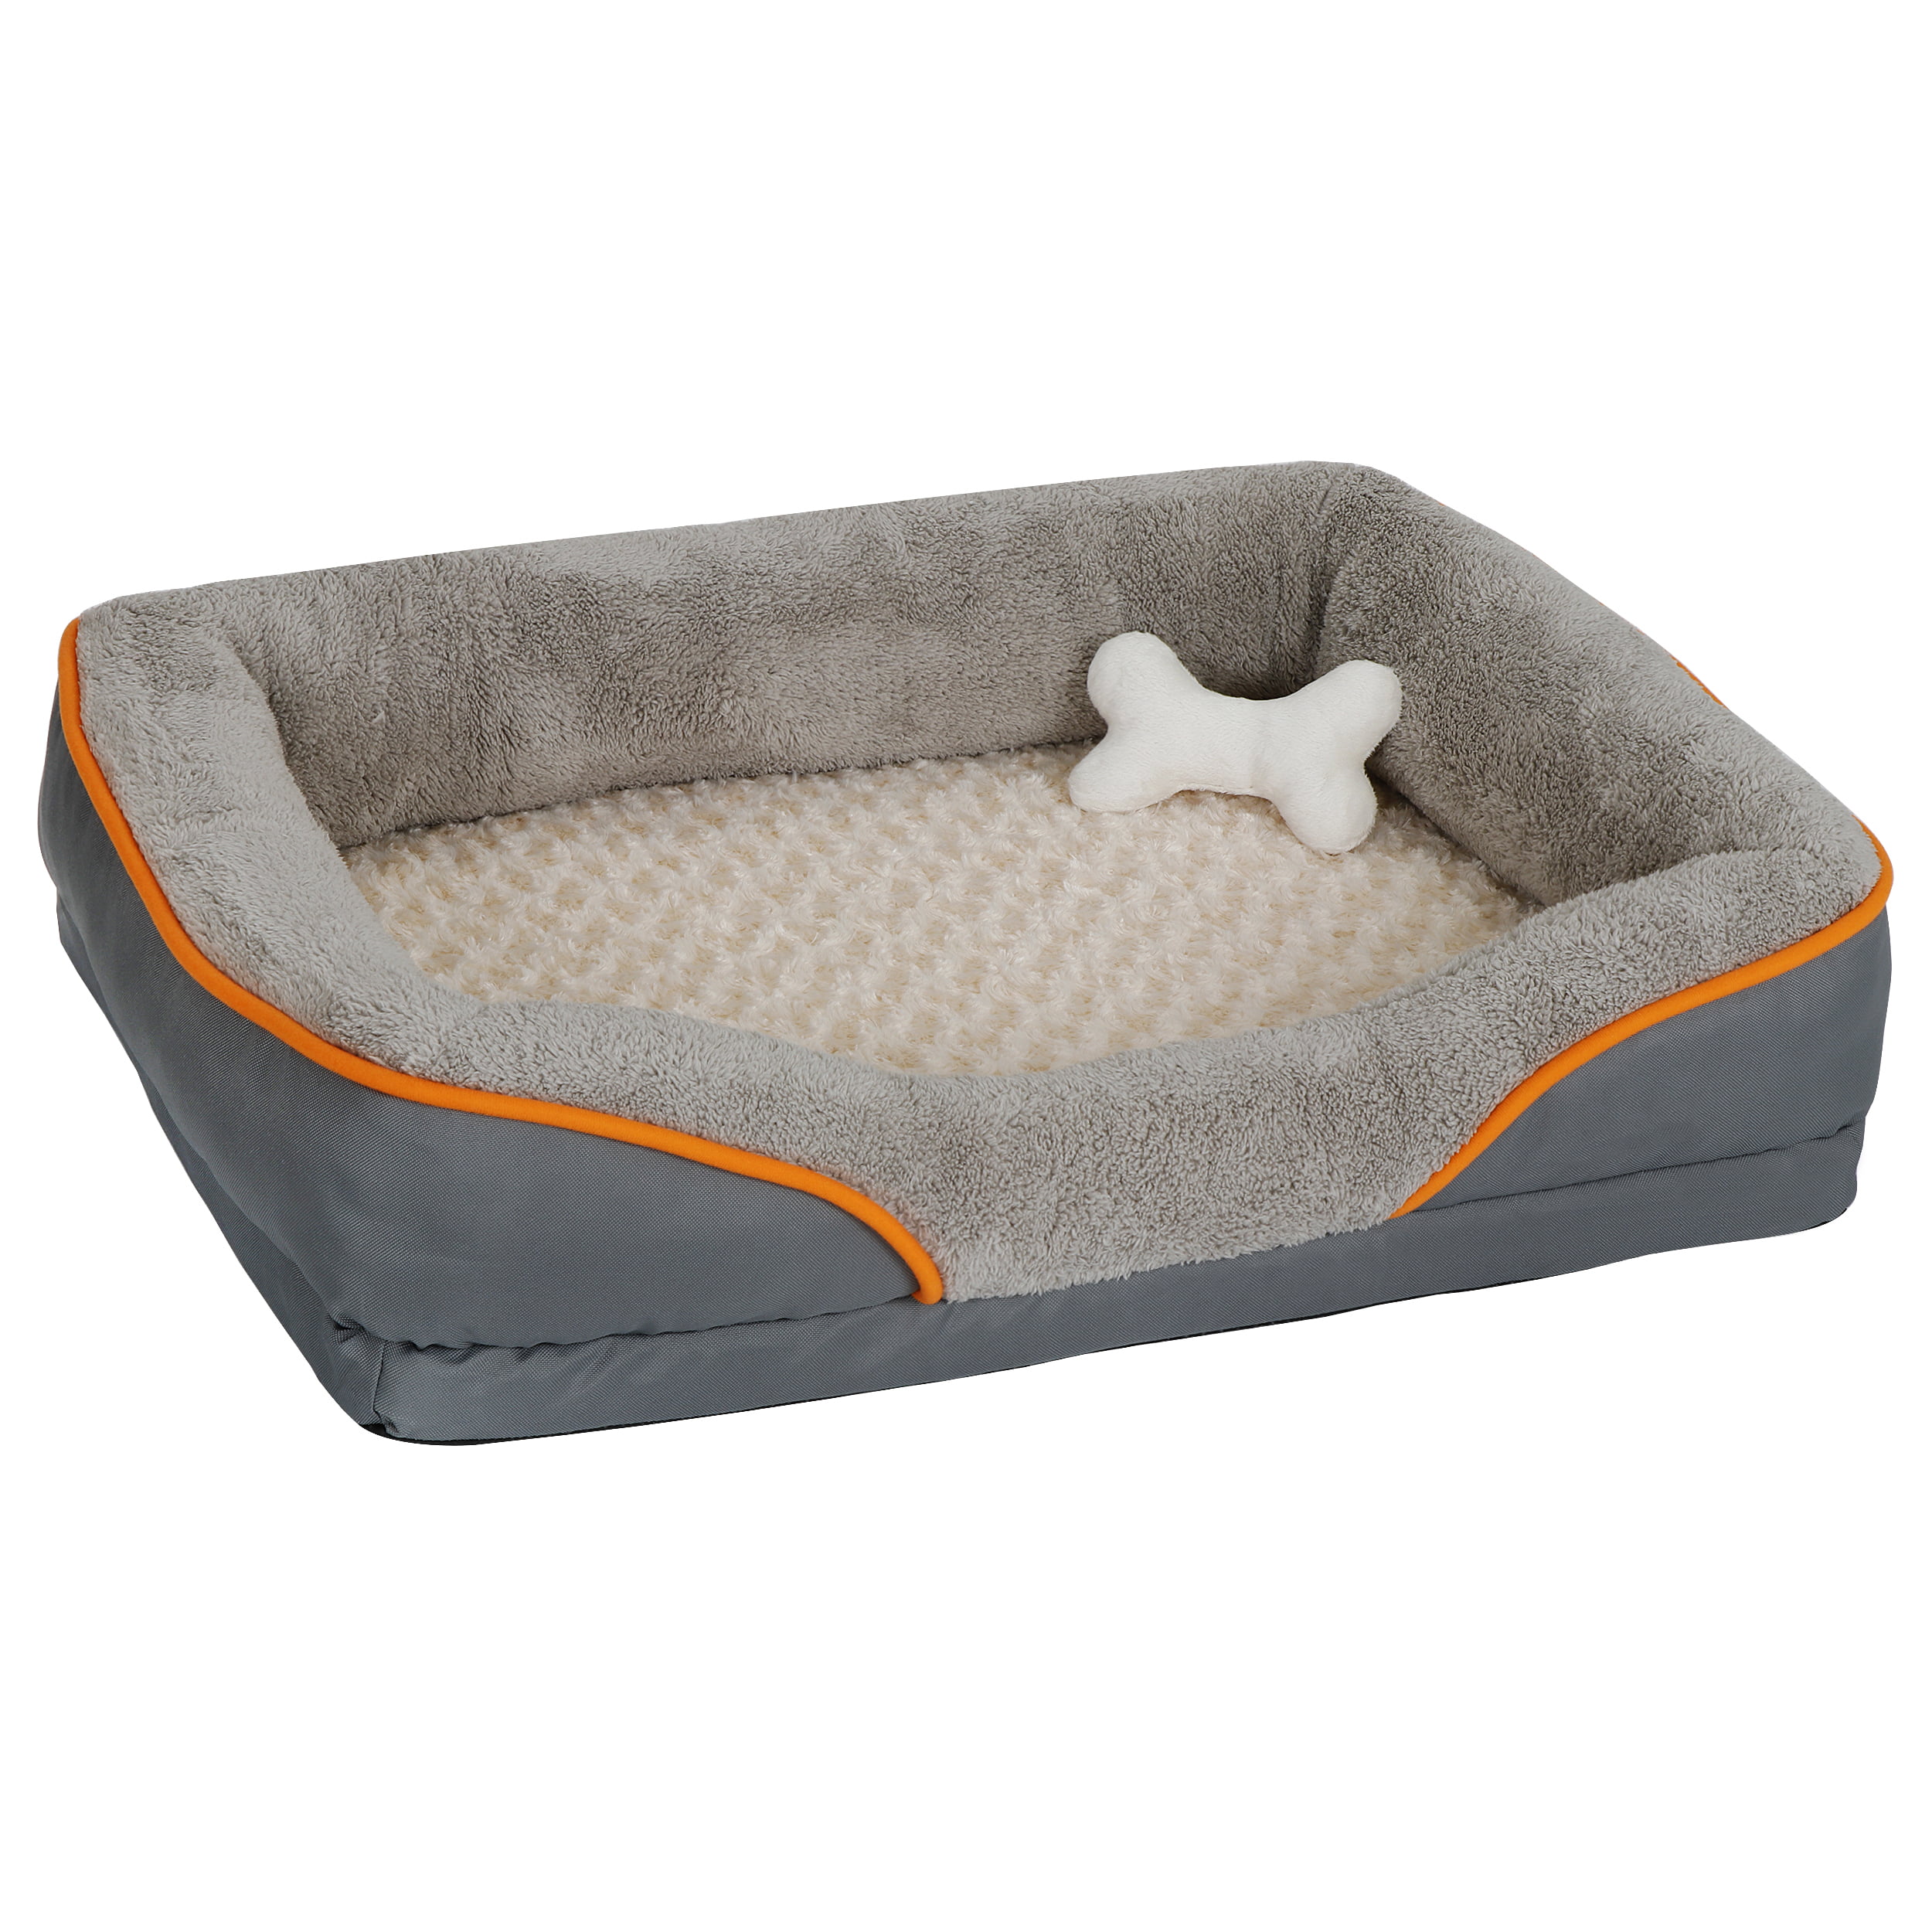 Segwae Orthopedic Sofa Pet Dog Bed, Medium, - Walmart.com ...